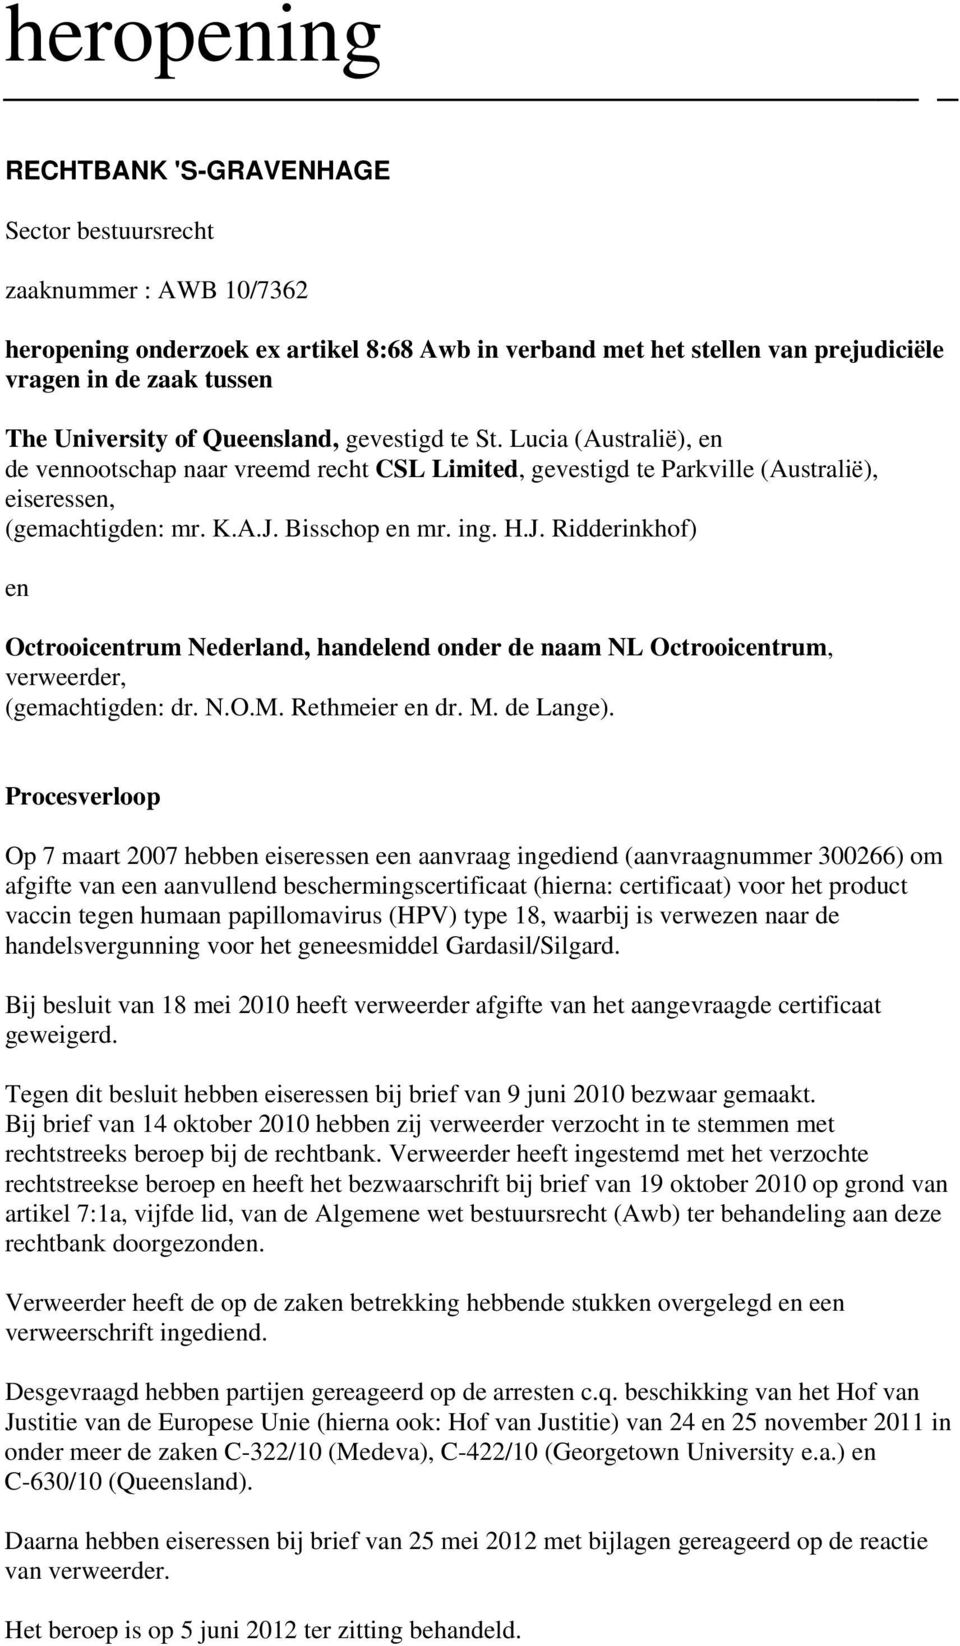 Bisschop en mr. ing. H.J. Ridderinkhof) en Octrooicentrum Nederland, handelend onder de naam NL Octrooicentrum, verweerder, (gemachtigden: dr. N.O.M. Rethmeier en dr. M. de Lange).